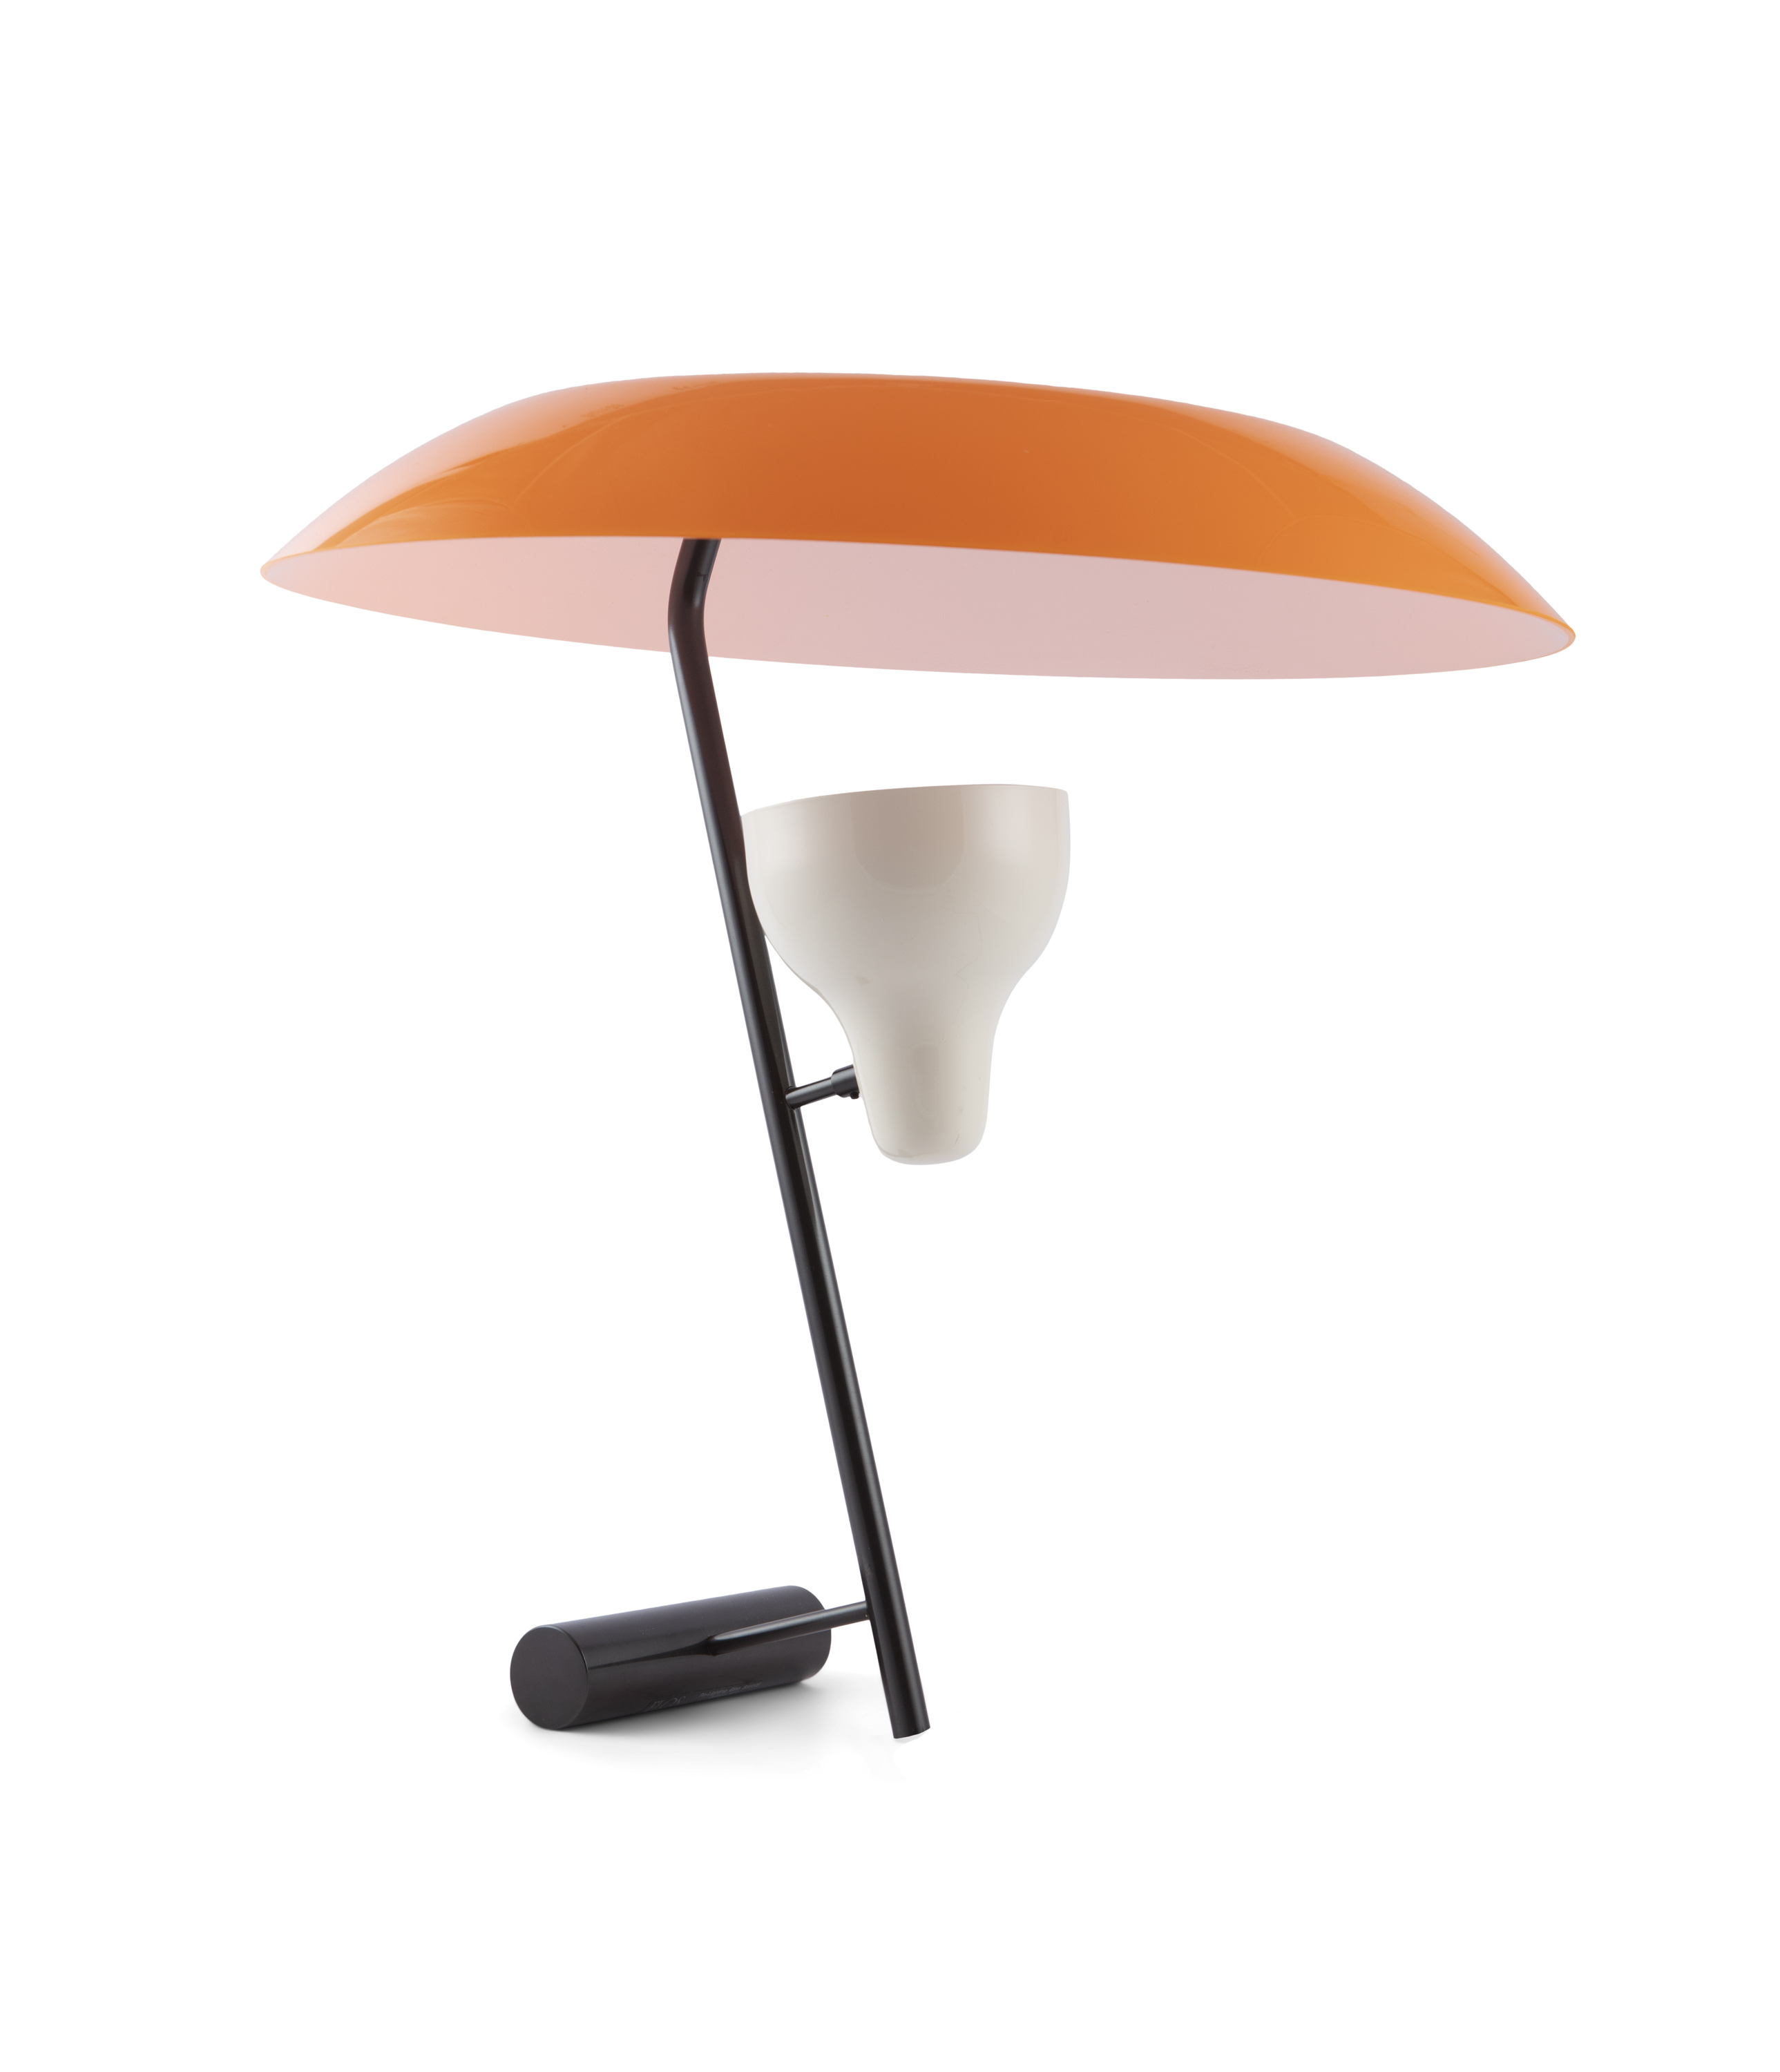 GINO SARFATTI A 'Model 548' table lamp designed by Gino Sarfatti for Flos, Italy. 49 x 50 x 50cm - Image 4 of 4